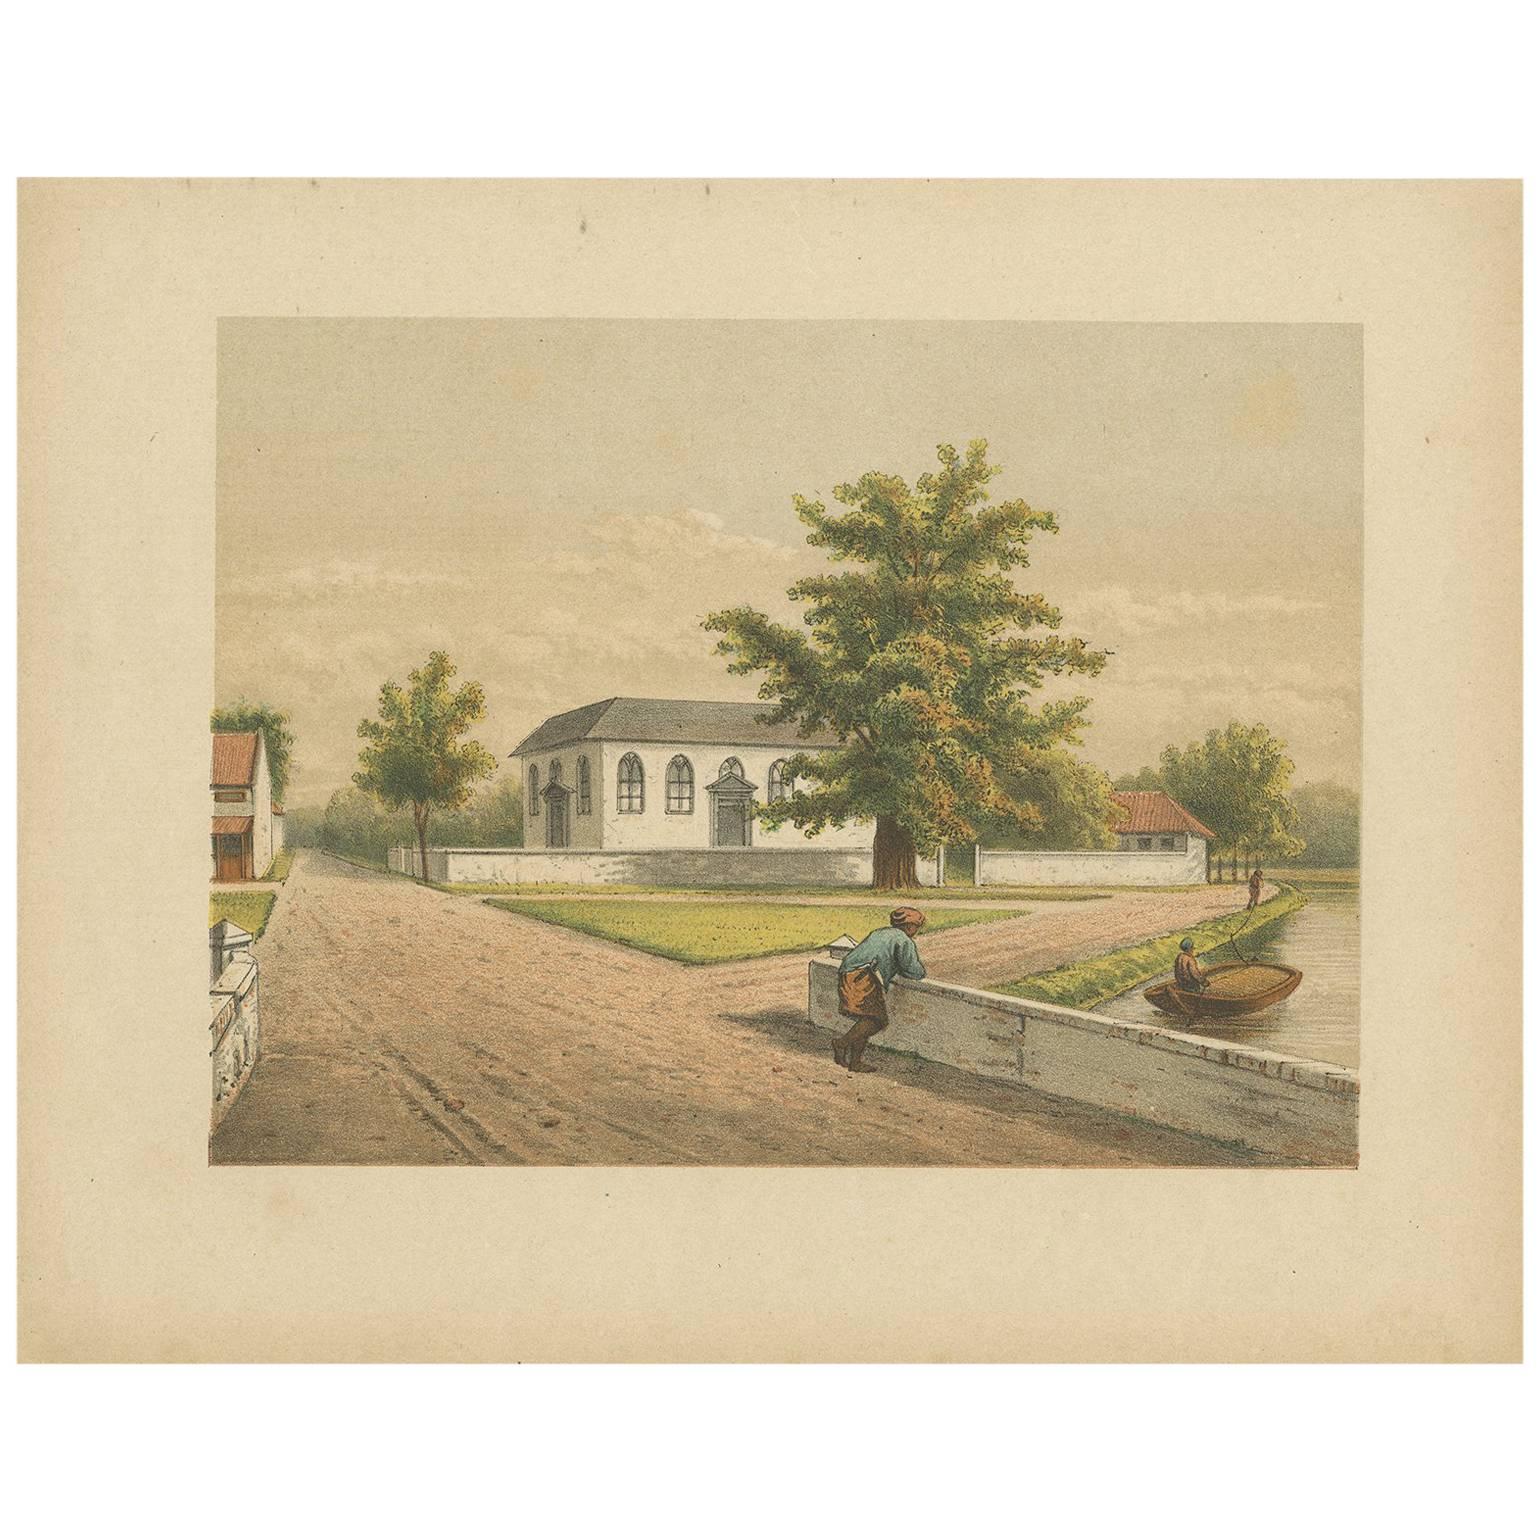 Antique Print of a Church in Batavia by M.T.H. Perelaer, 1888